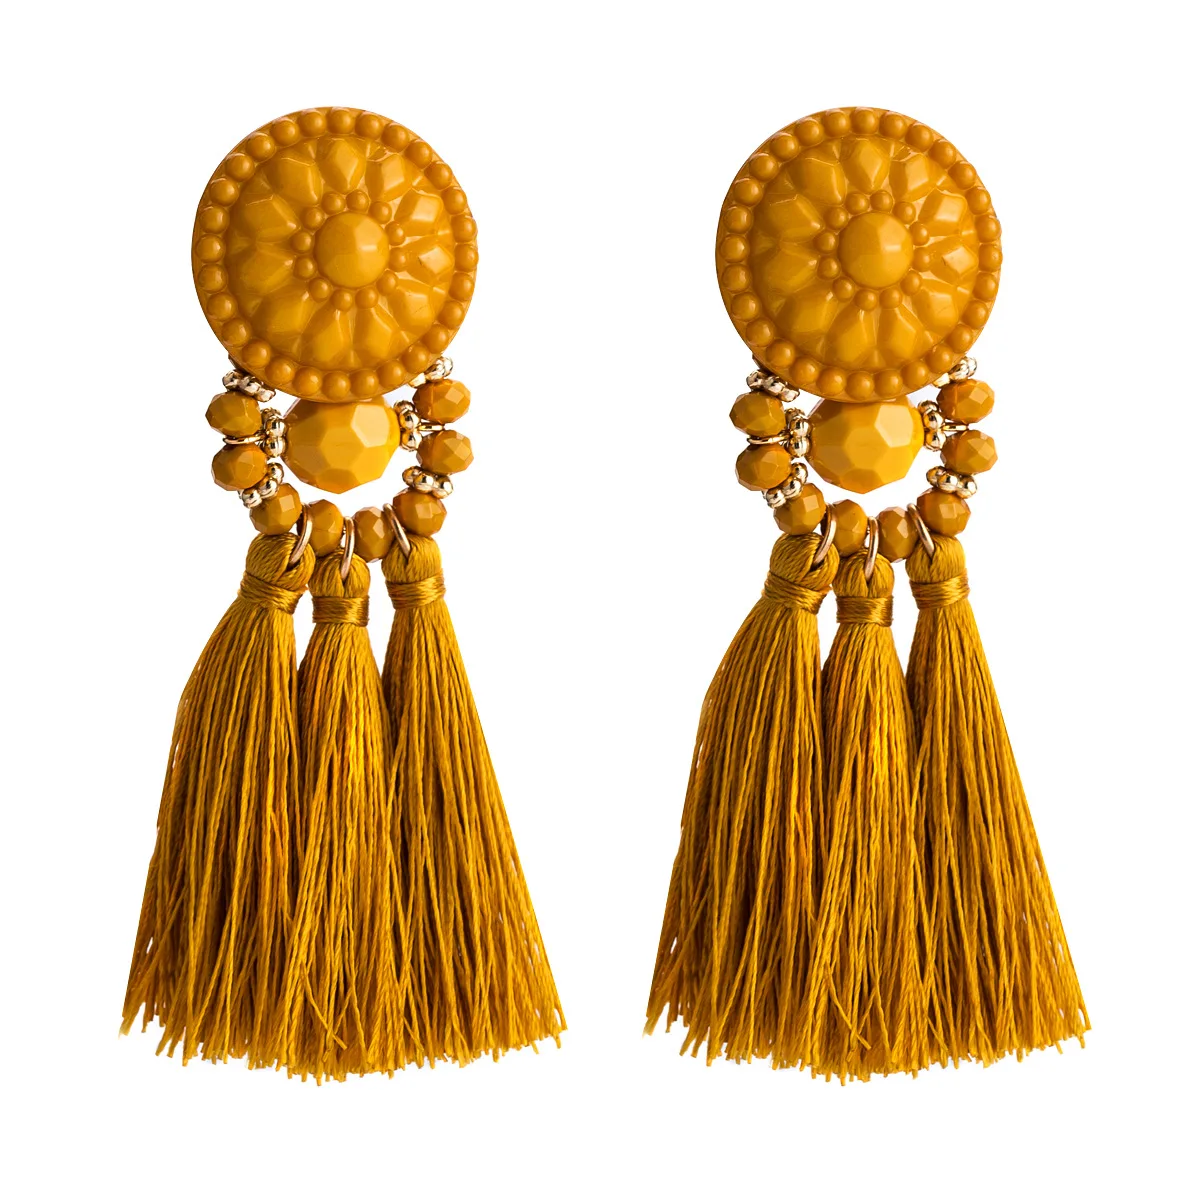 

JUHU 2021 Exaggerated Multi-layer Hand-woven Tassel Alloy Earrings Resin Stud Earrings Bohemia Jewelry For Women, Gold